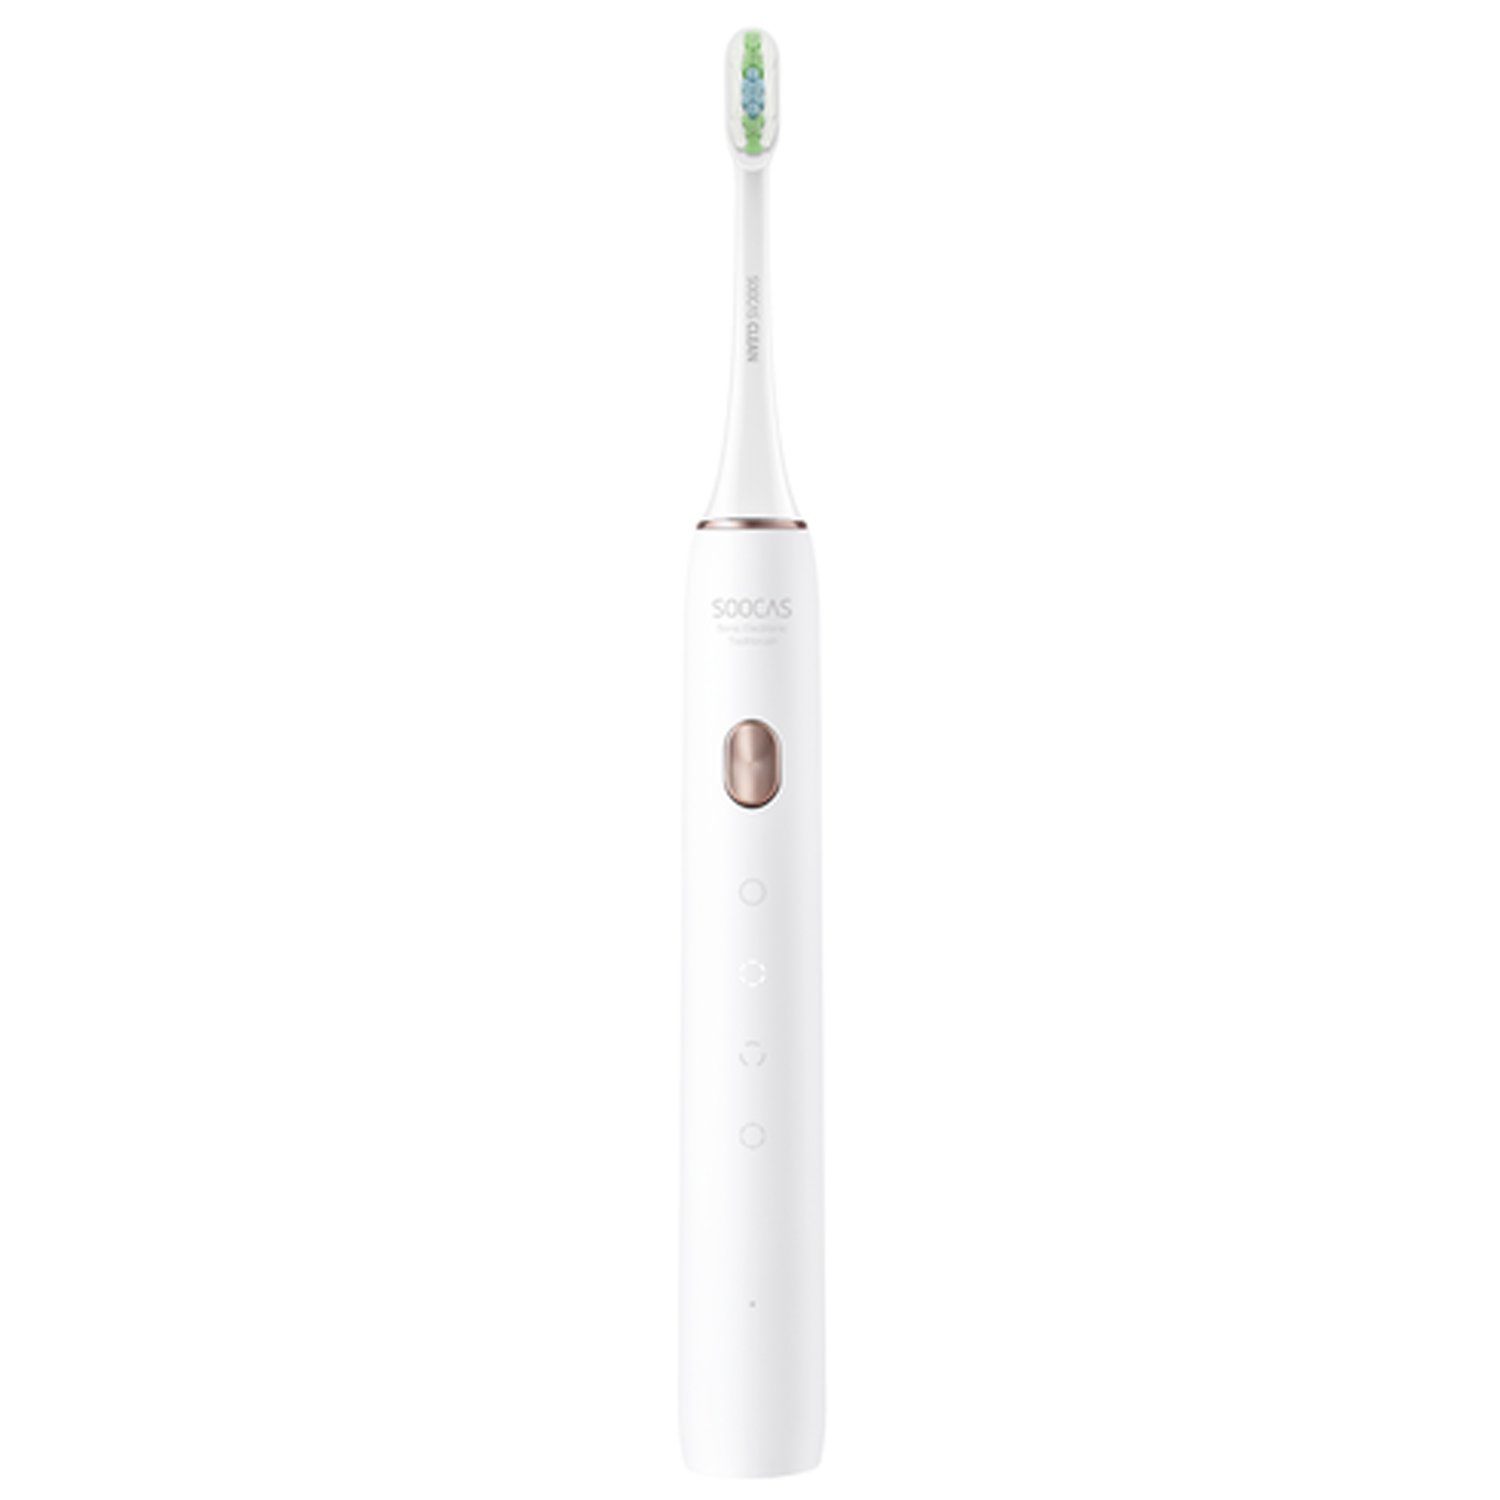 Soocas Original Replacement Toothbrush heads for X1/ X3U/ X5, White Default Soocas 